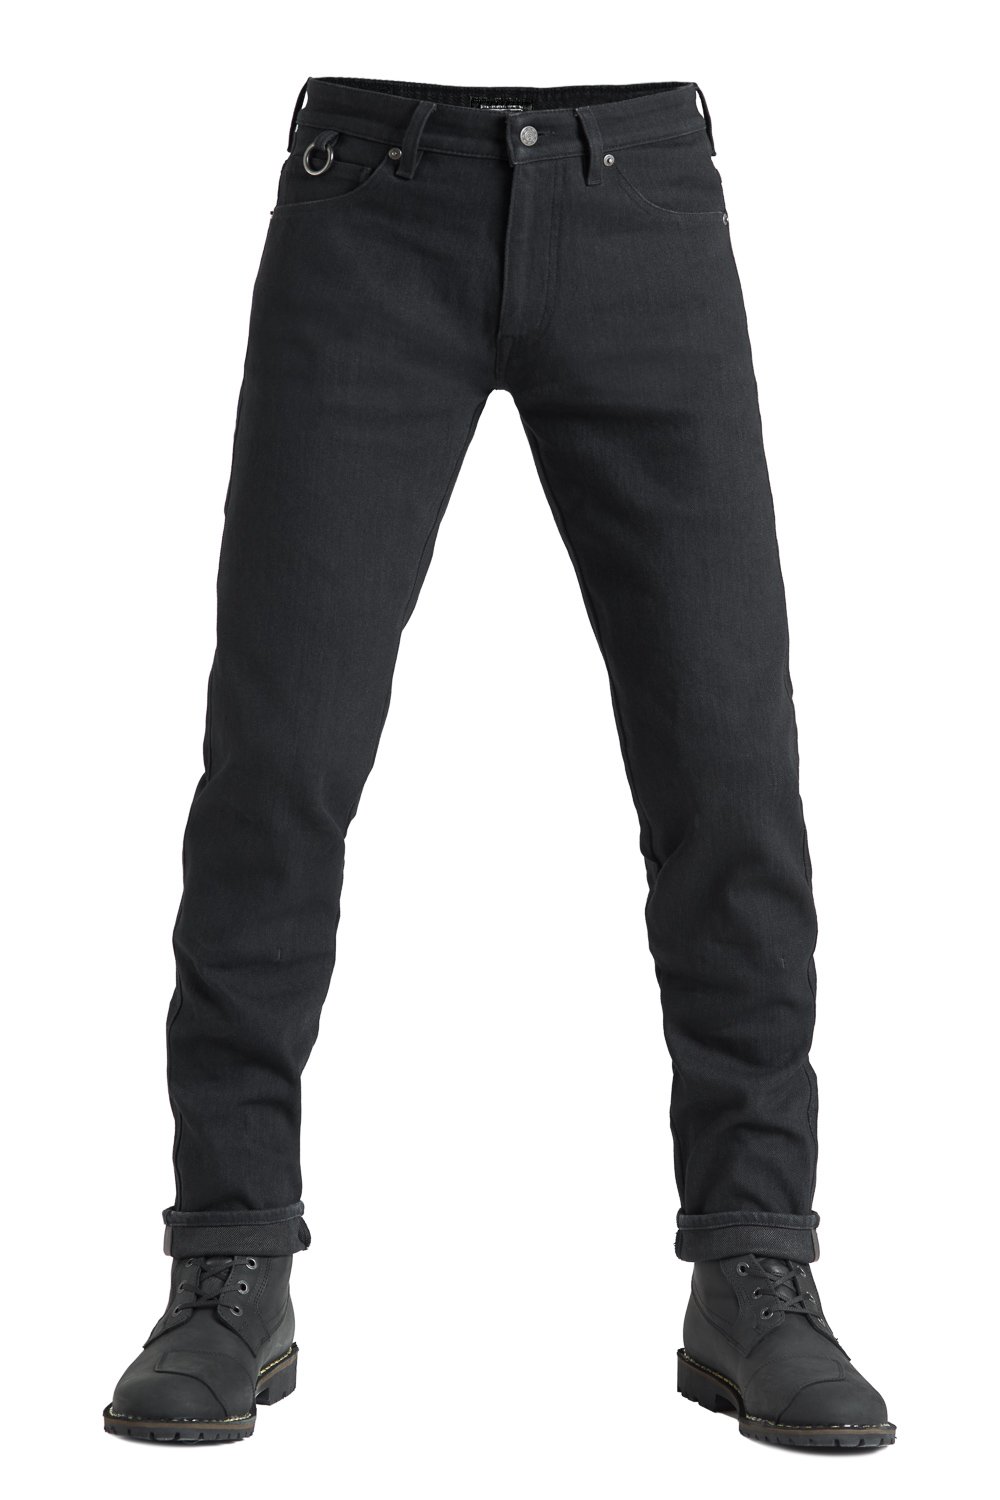 Image of Pando Moto Steel Noir 02 Slim Fit Dyneema® Pantalon Taille W30/L34